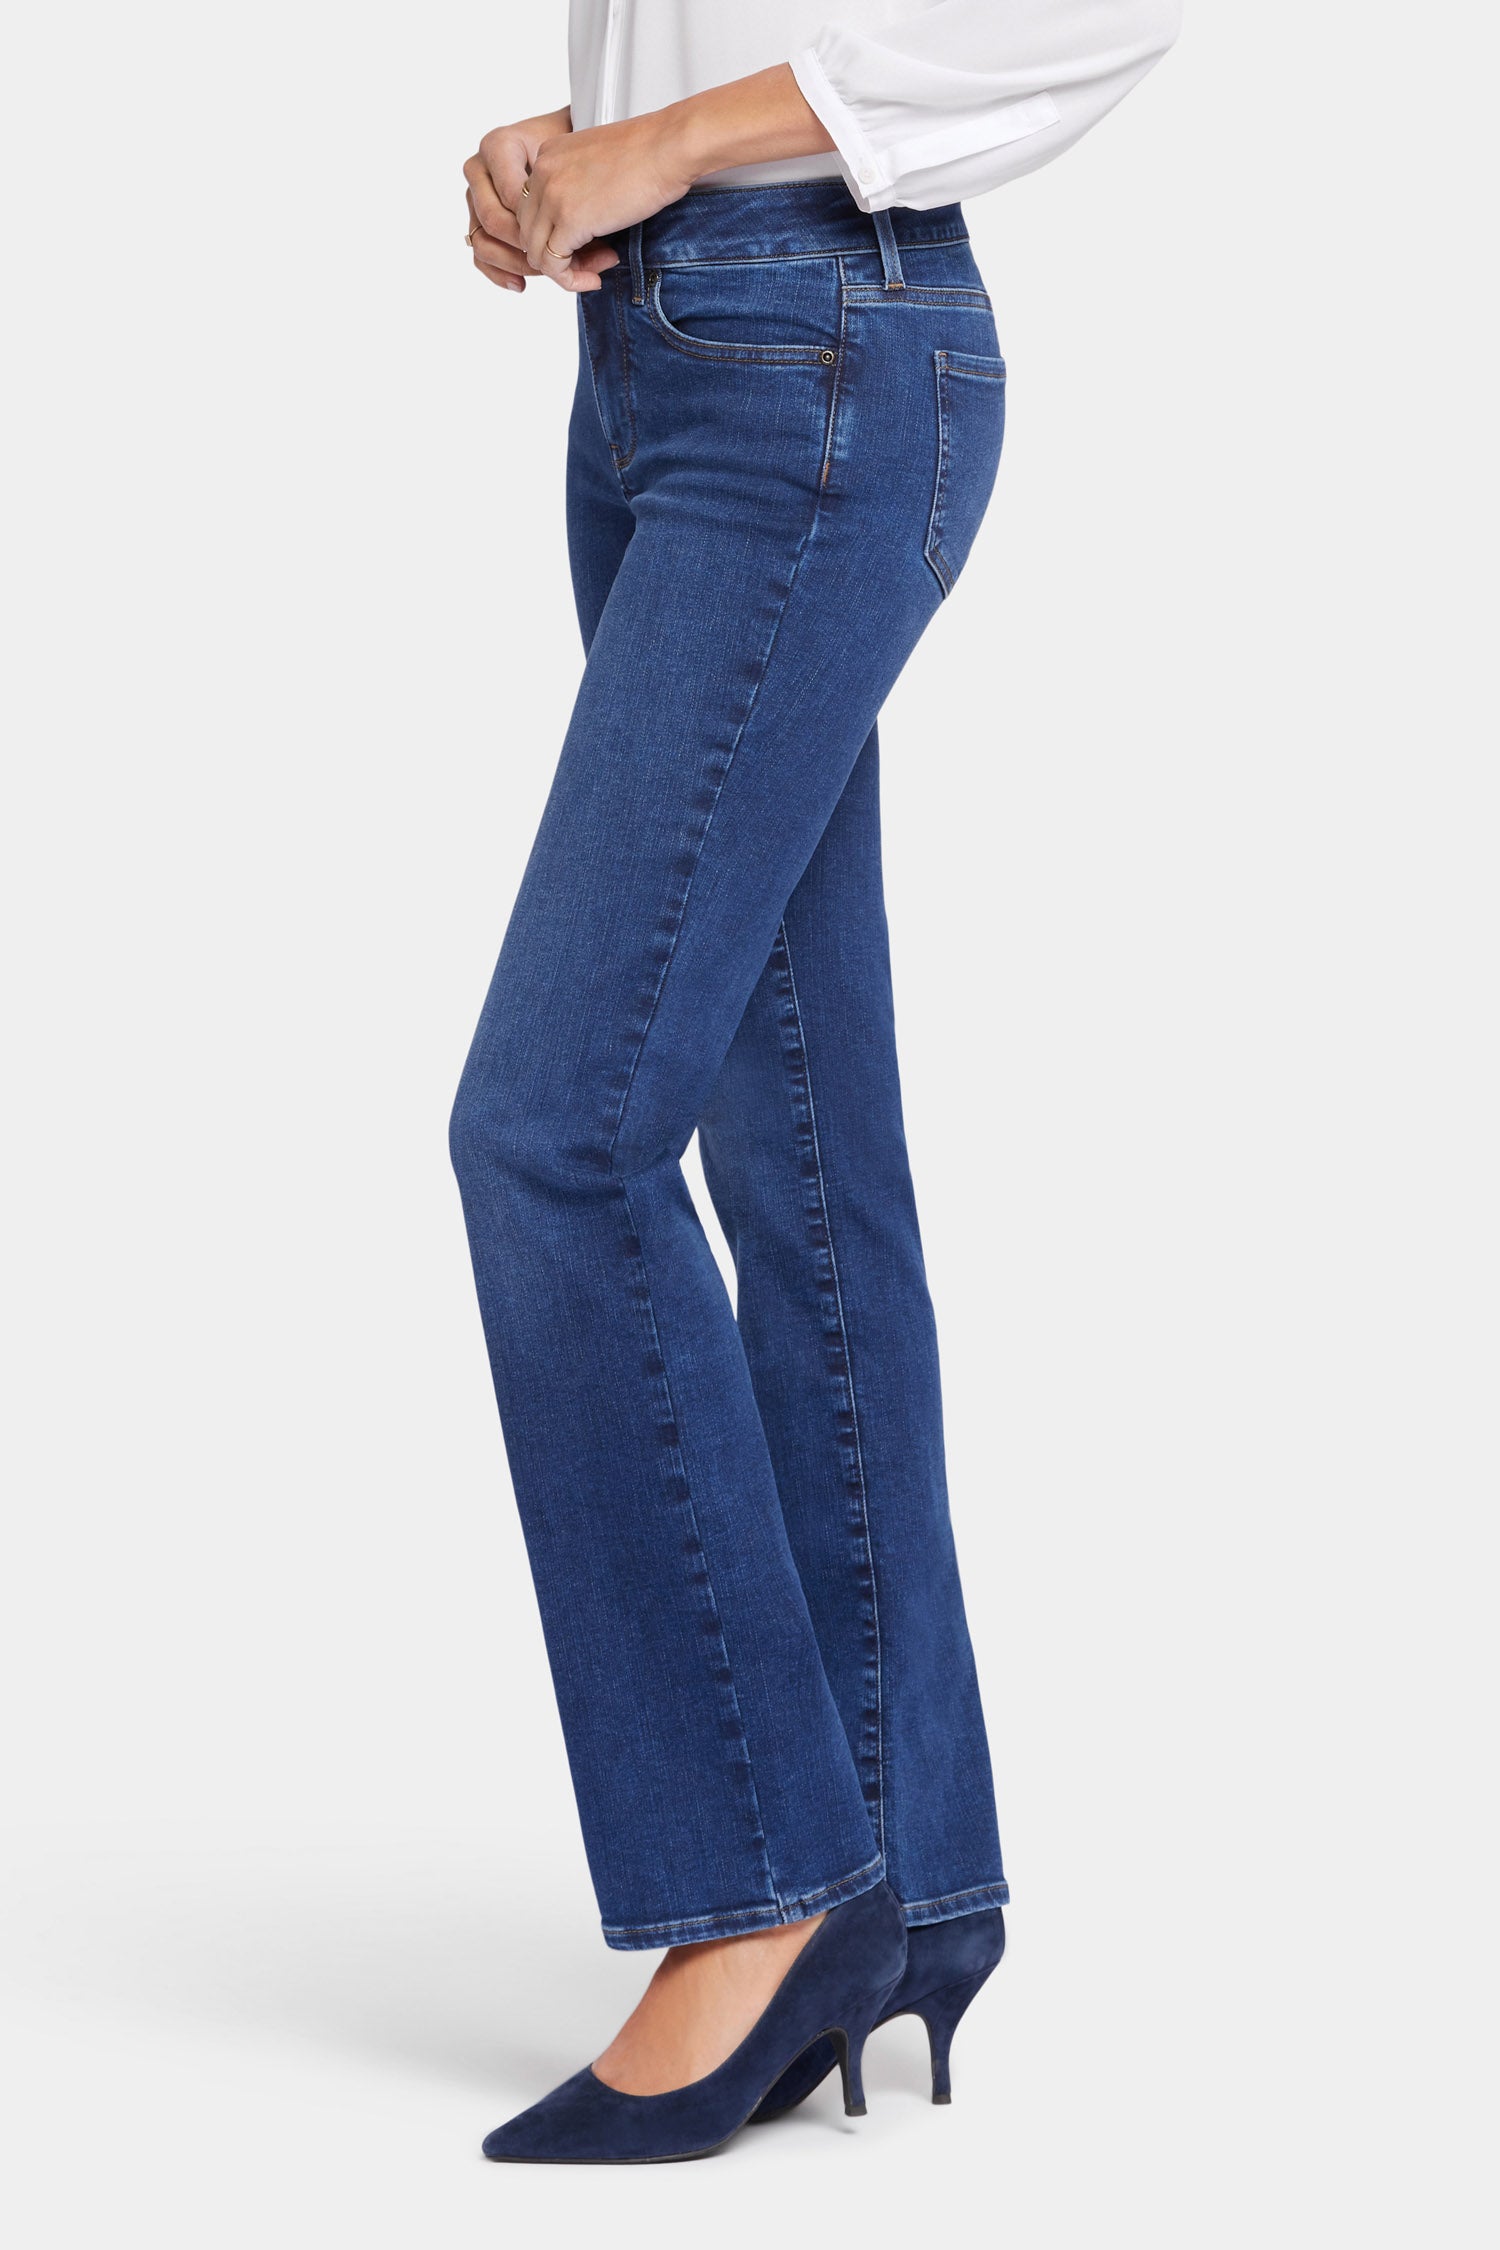 Marilyn Straight Jeans In Petite - Cooper Blue | NYDJ